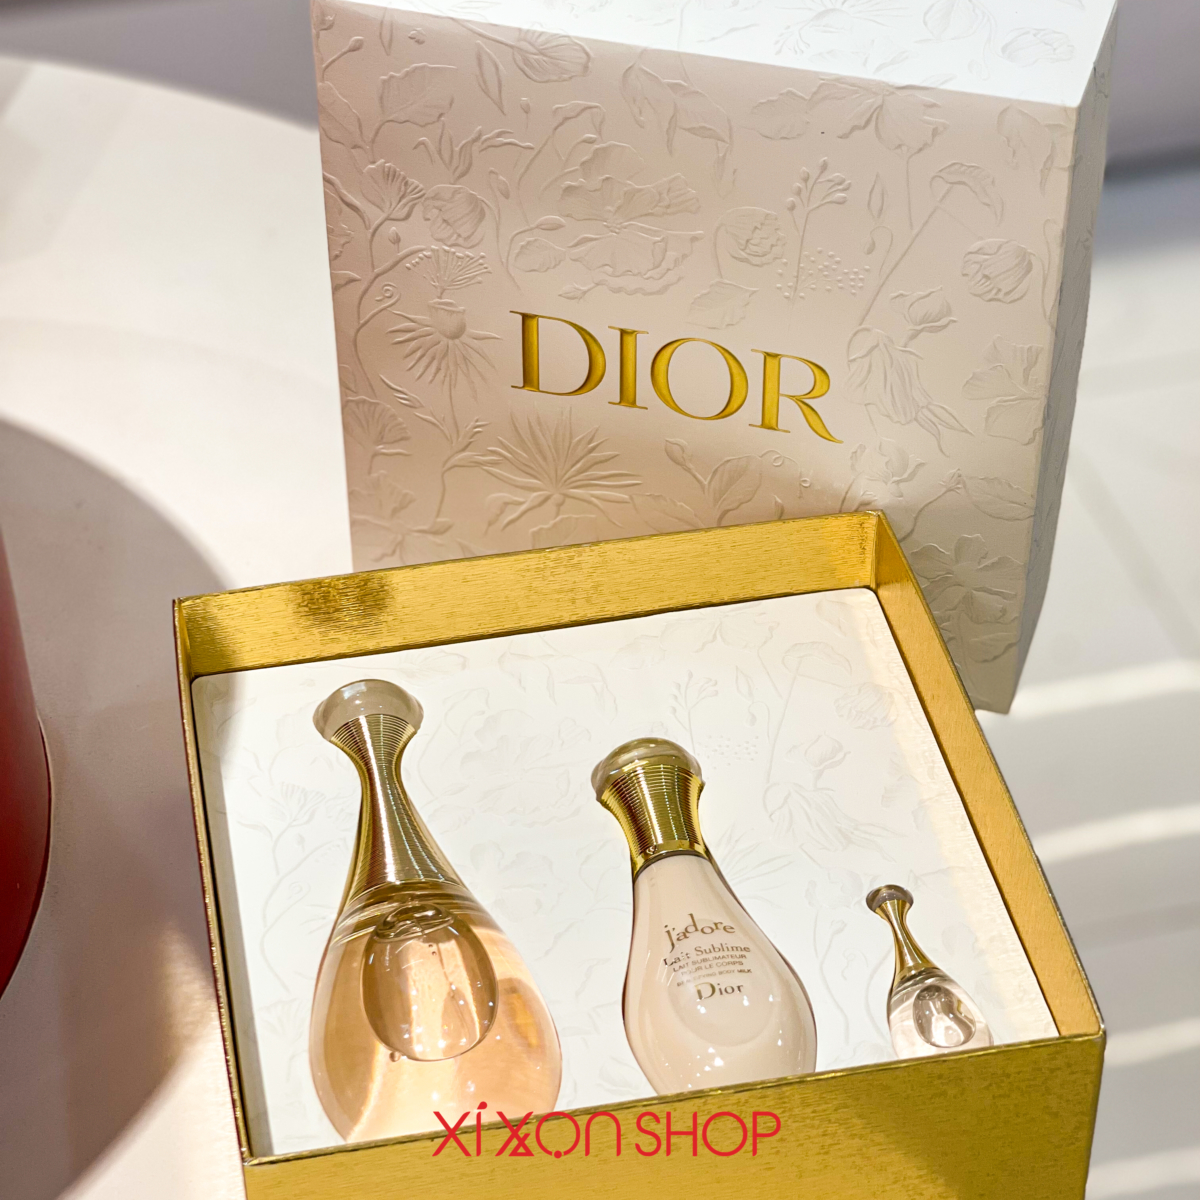 Dior Jadore La Collection Mini 4 Piece Perfume Set 5442  Prosadhonicom   Makeup  Cosmetics Shop in Bangladesh